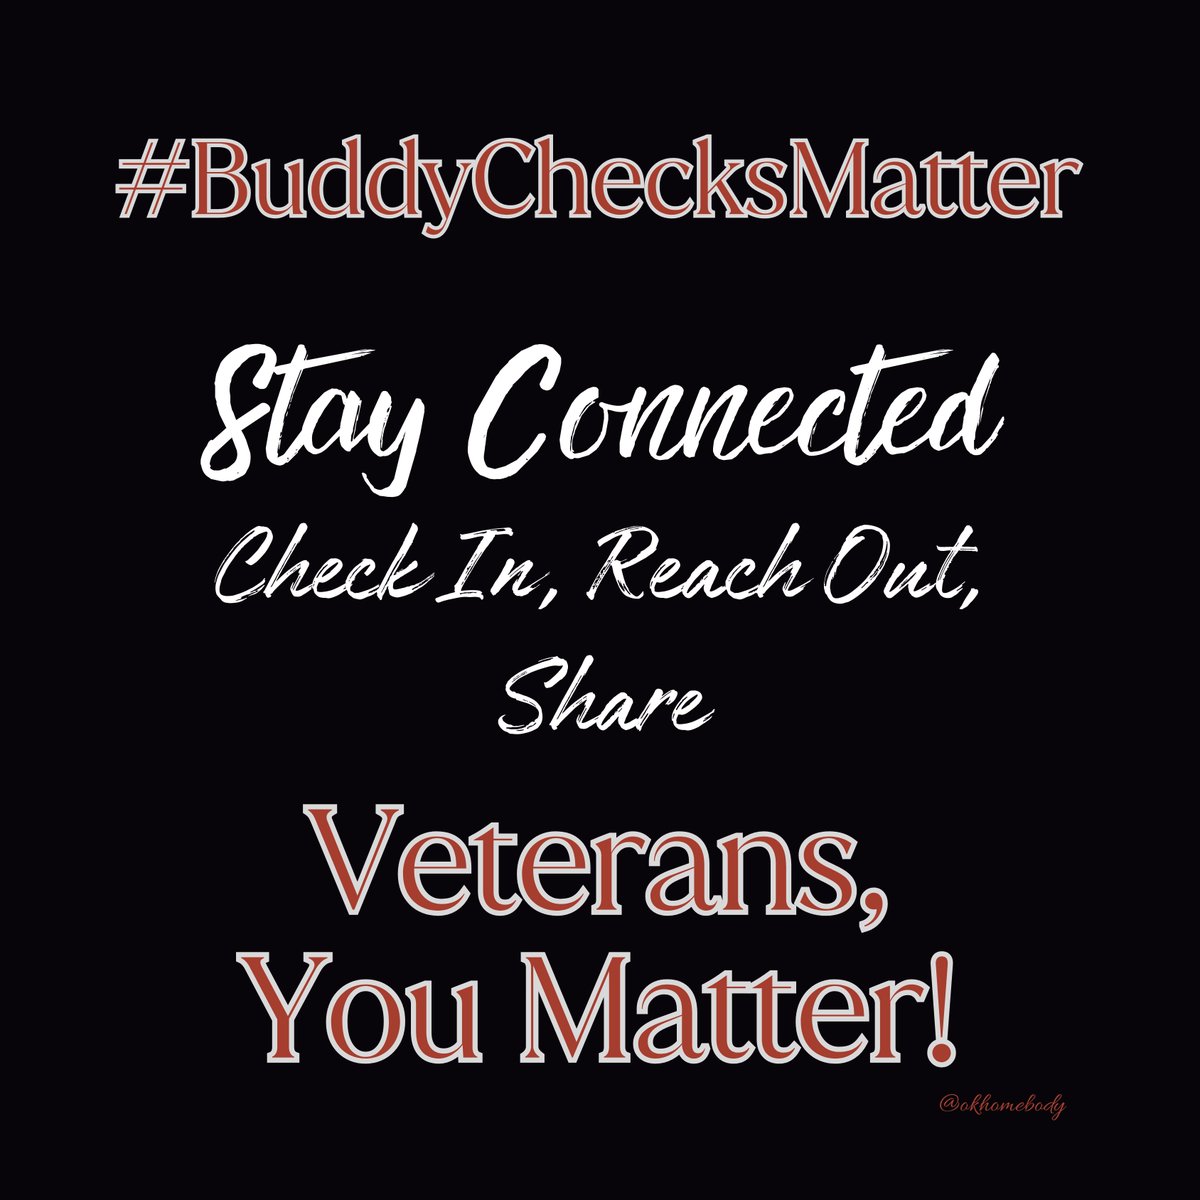 🇺🇸 #SERENESATURDAY #Buddy✅with #Veterans 🙏RH
❤️#BuddyChecksMatter because #VeteransLivesMatter❤️
⭐️ 🇺🇸 Repost #EndVeteranSuicide #988press1 🇺🇸⭐️
🇺🇸 @MimiE0417 @MChinchopper @C0smicR0nin @CraigH_WPS 👈
🇺🇸 @JesseWolfDancer @DarinArmstrong @Rashelly123 👈
🇺🇸@SteveSample22…